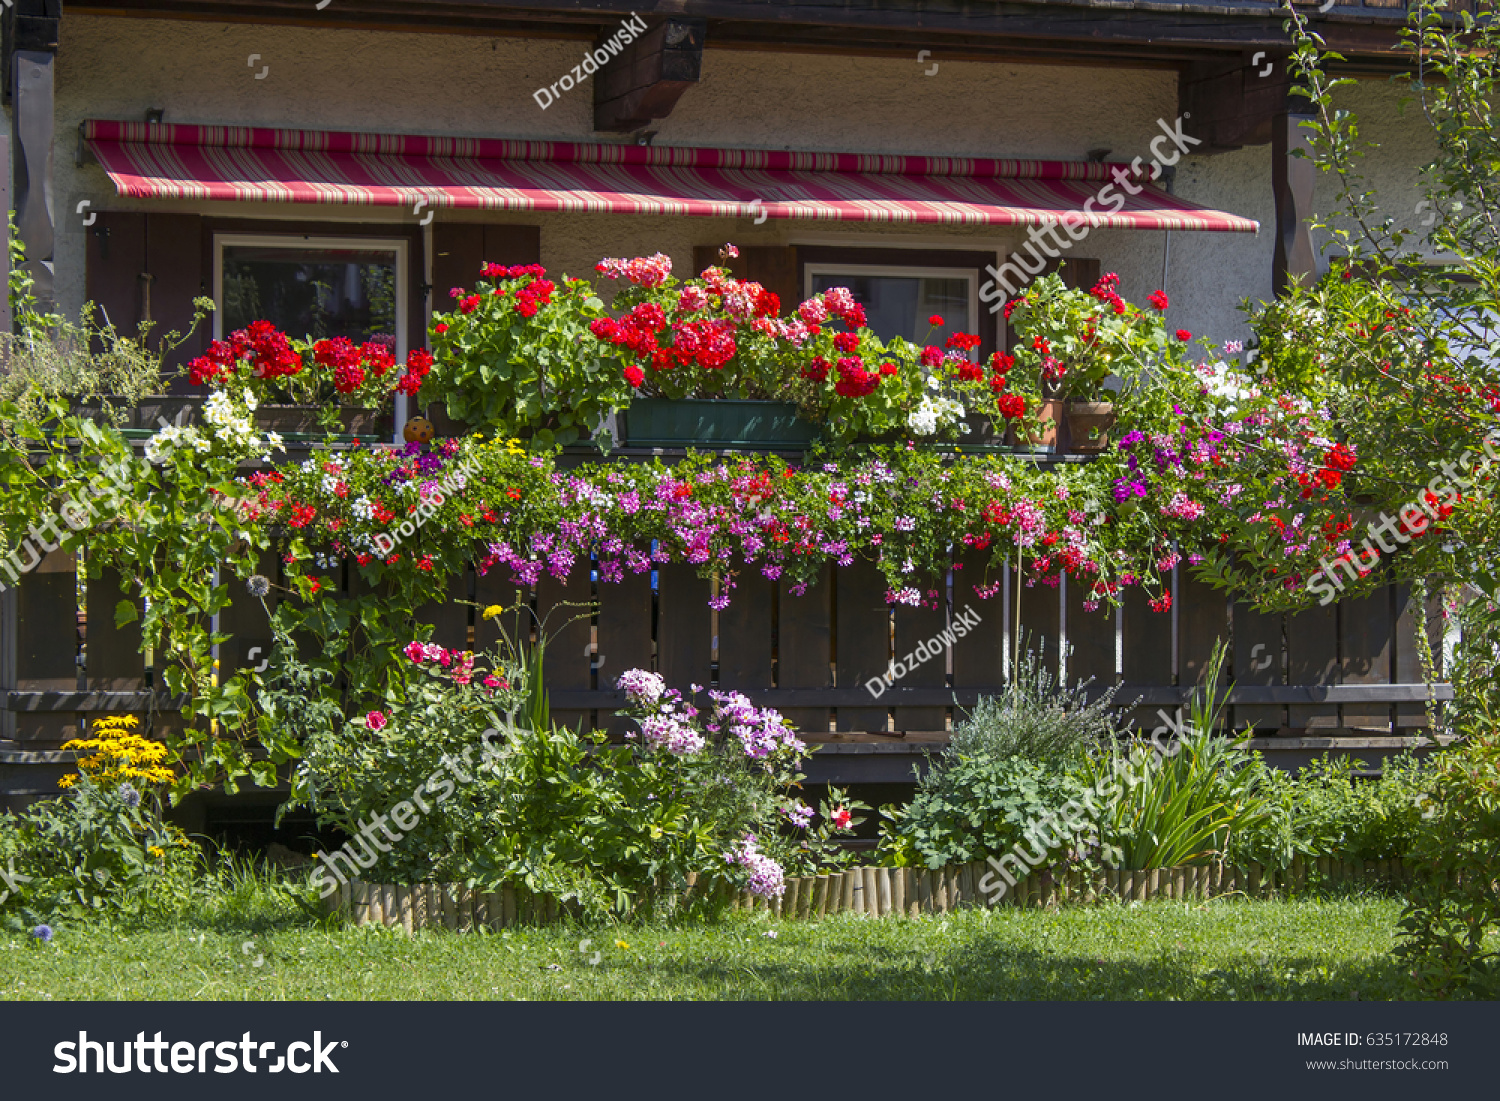 Alp house with a balcony with flower boxes, Tirol, Austria #635172848